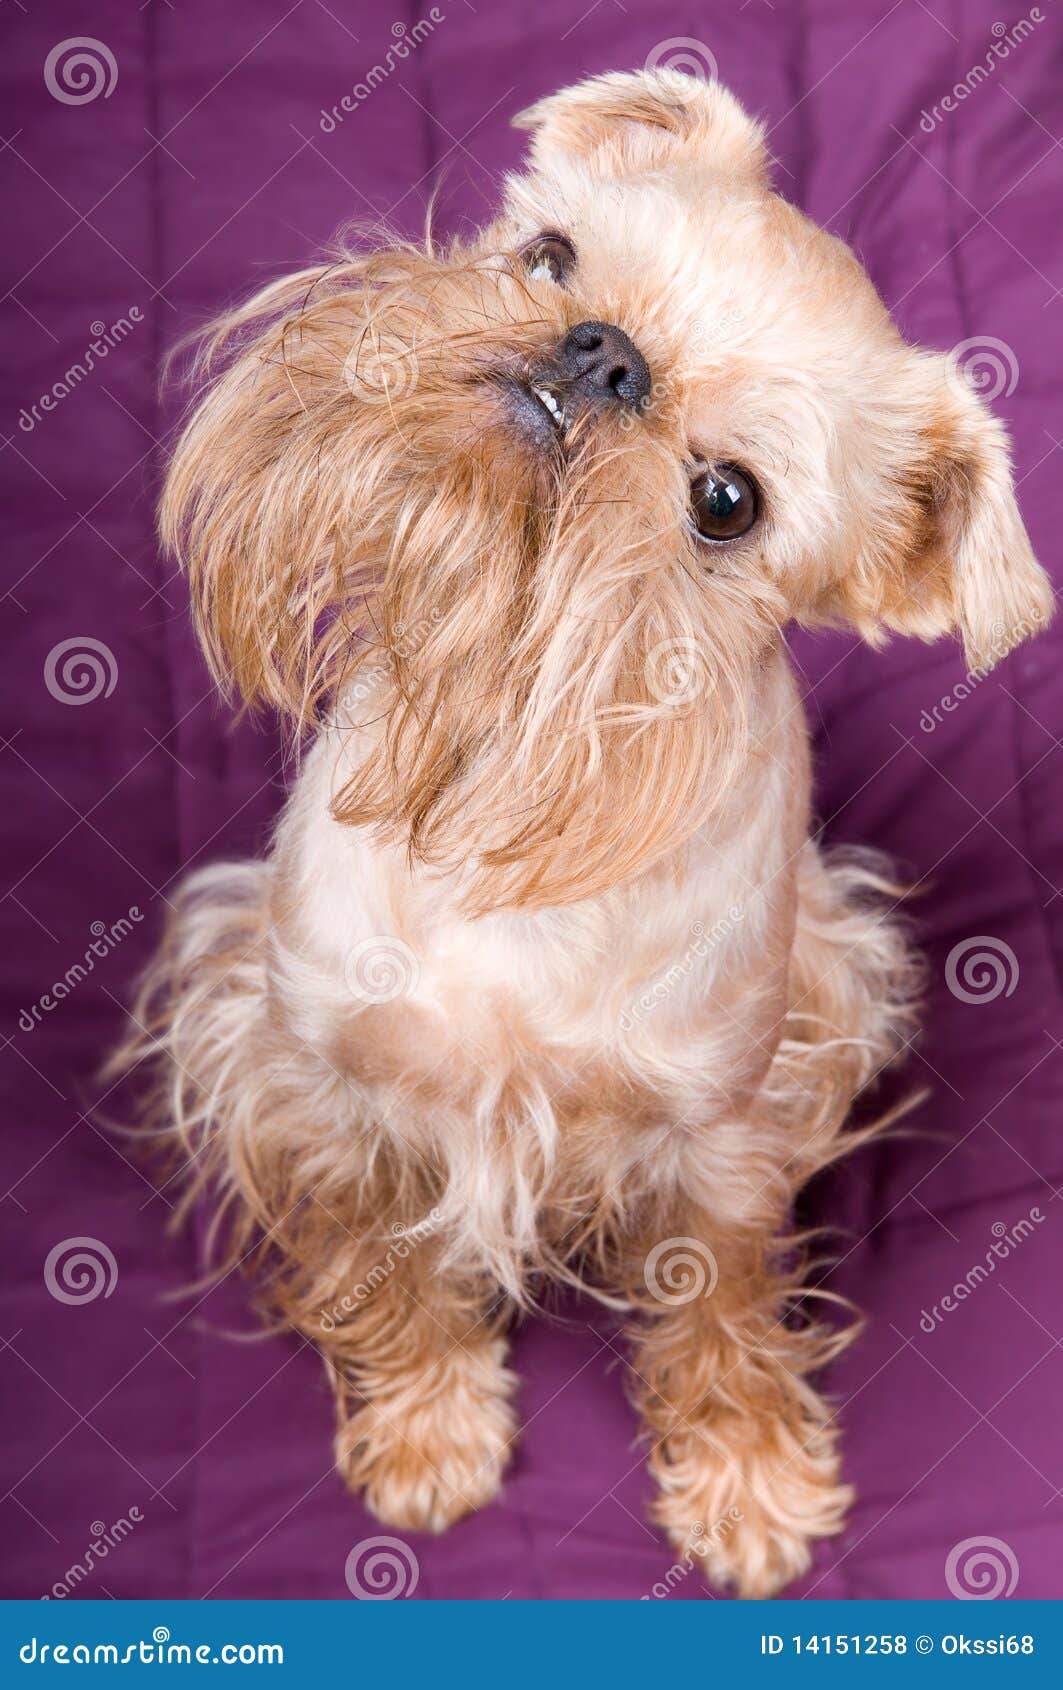 Griffon Bruxellois stock photo. Image of sandy, canine - 14151258